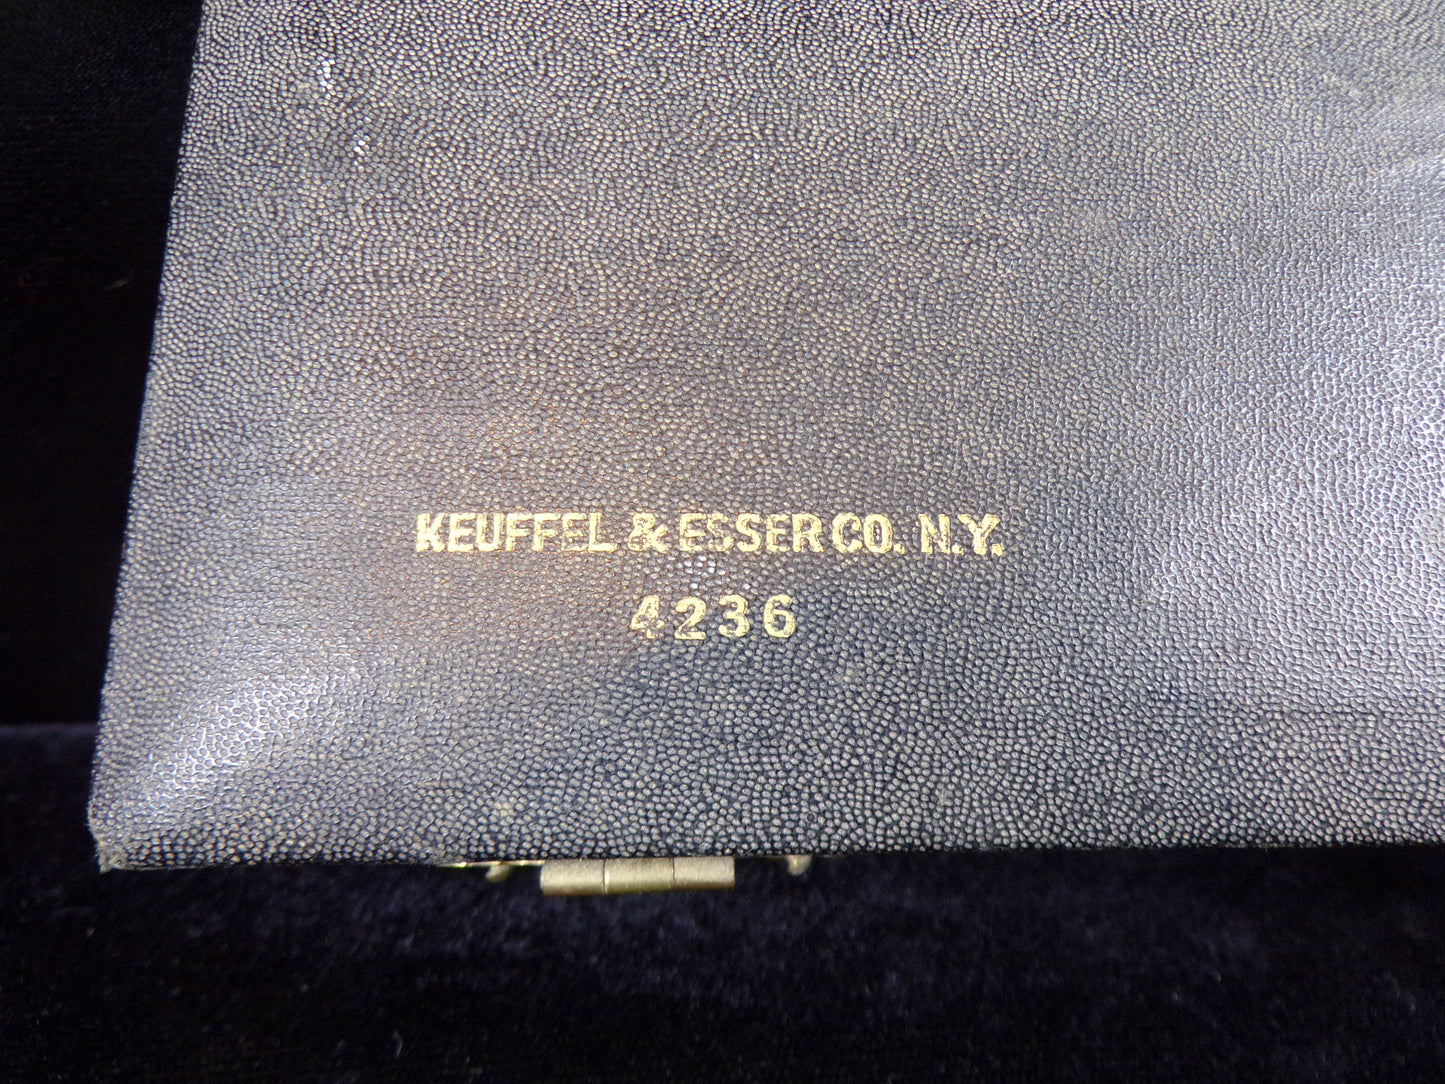 Vintage K&E Keuffel & Esser 4236 Compensating Polar Planimeter, Complete, with Case